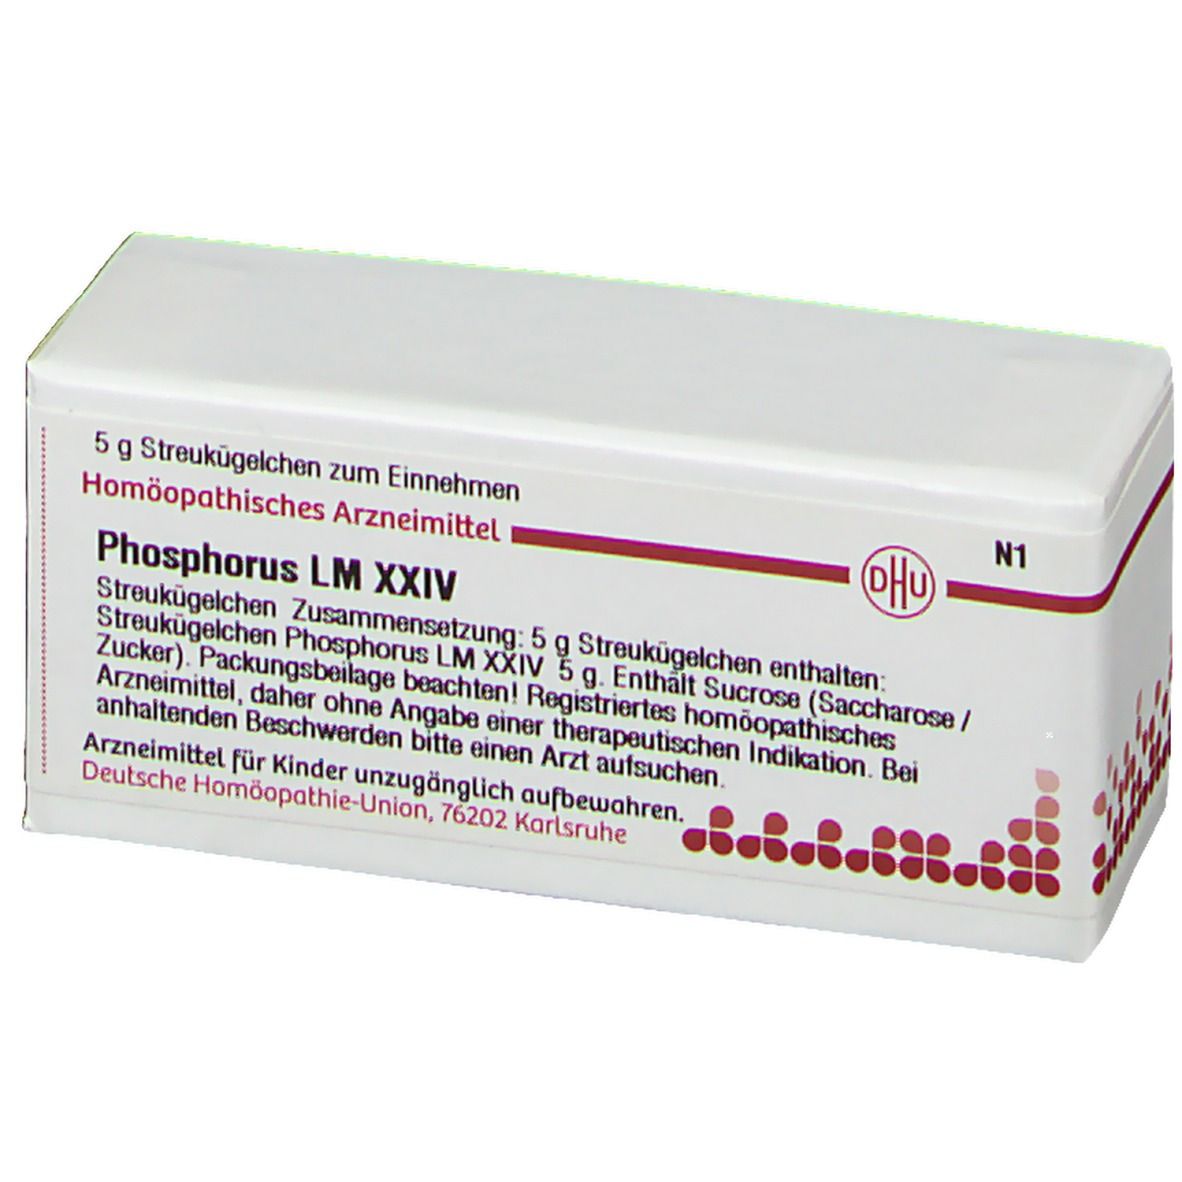 DHU Phosphorus LM XXIV